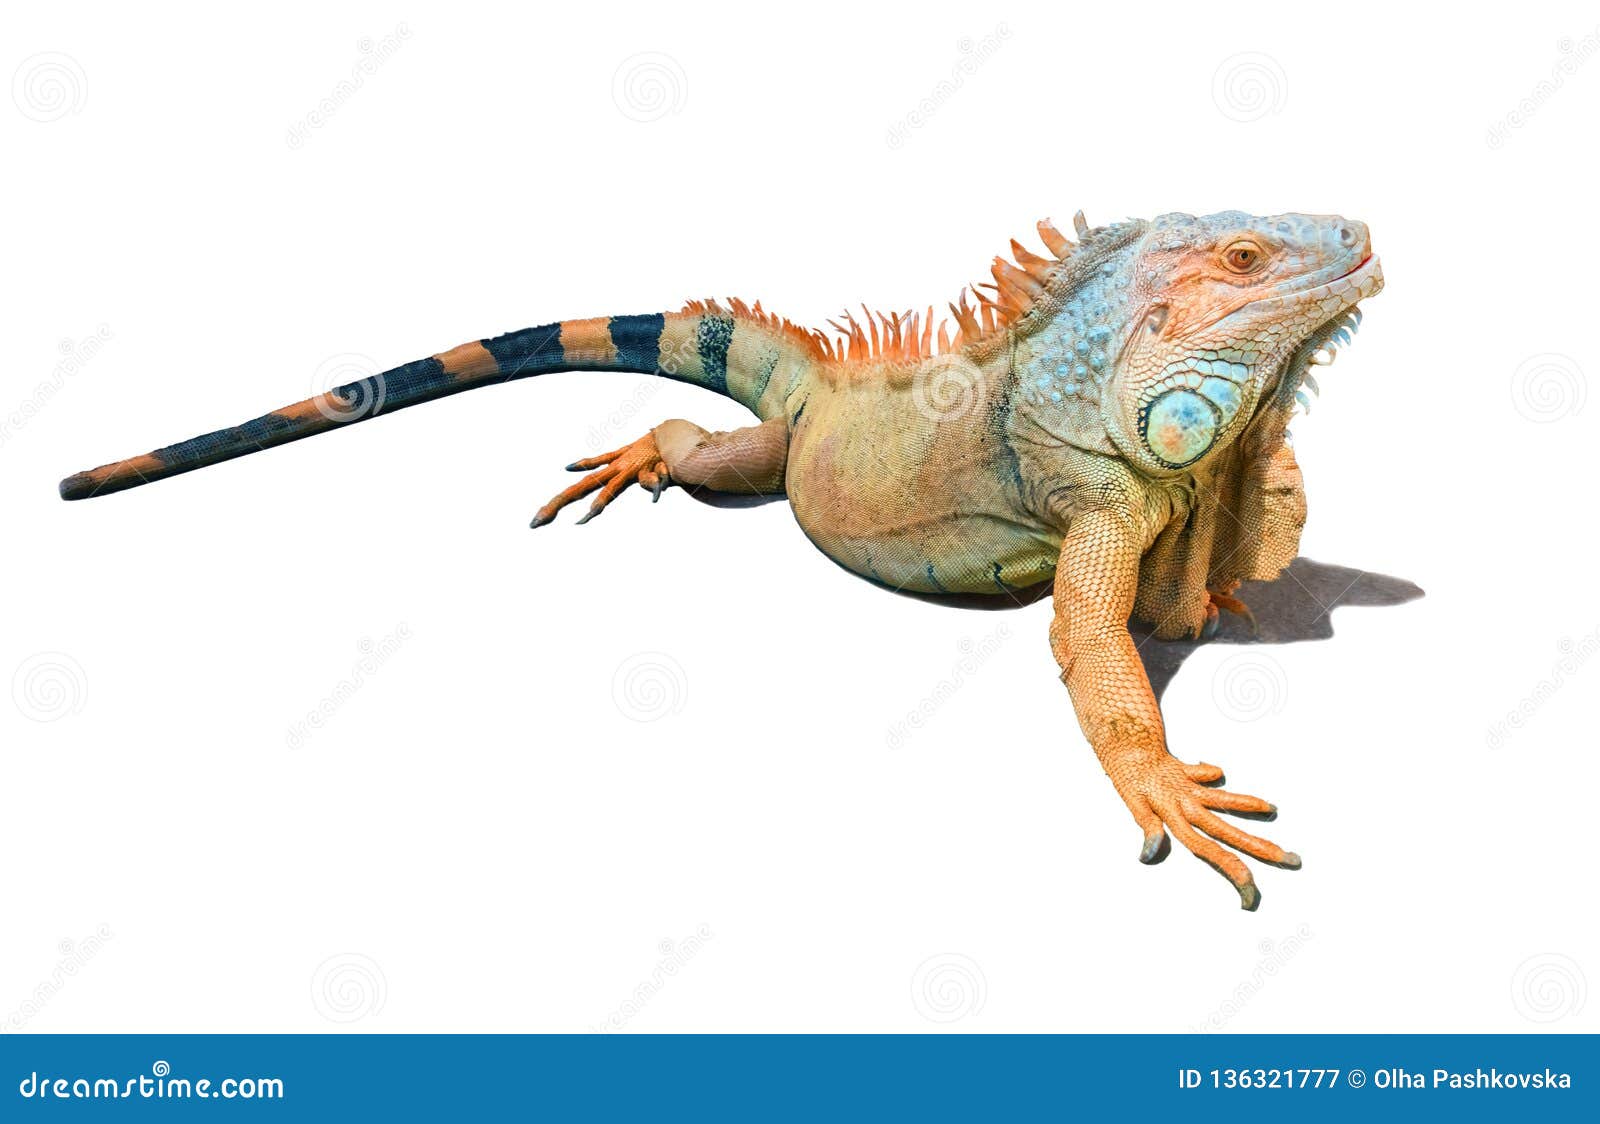 orange, brown and blue iguana  on white